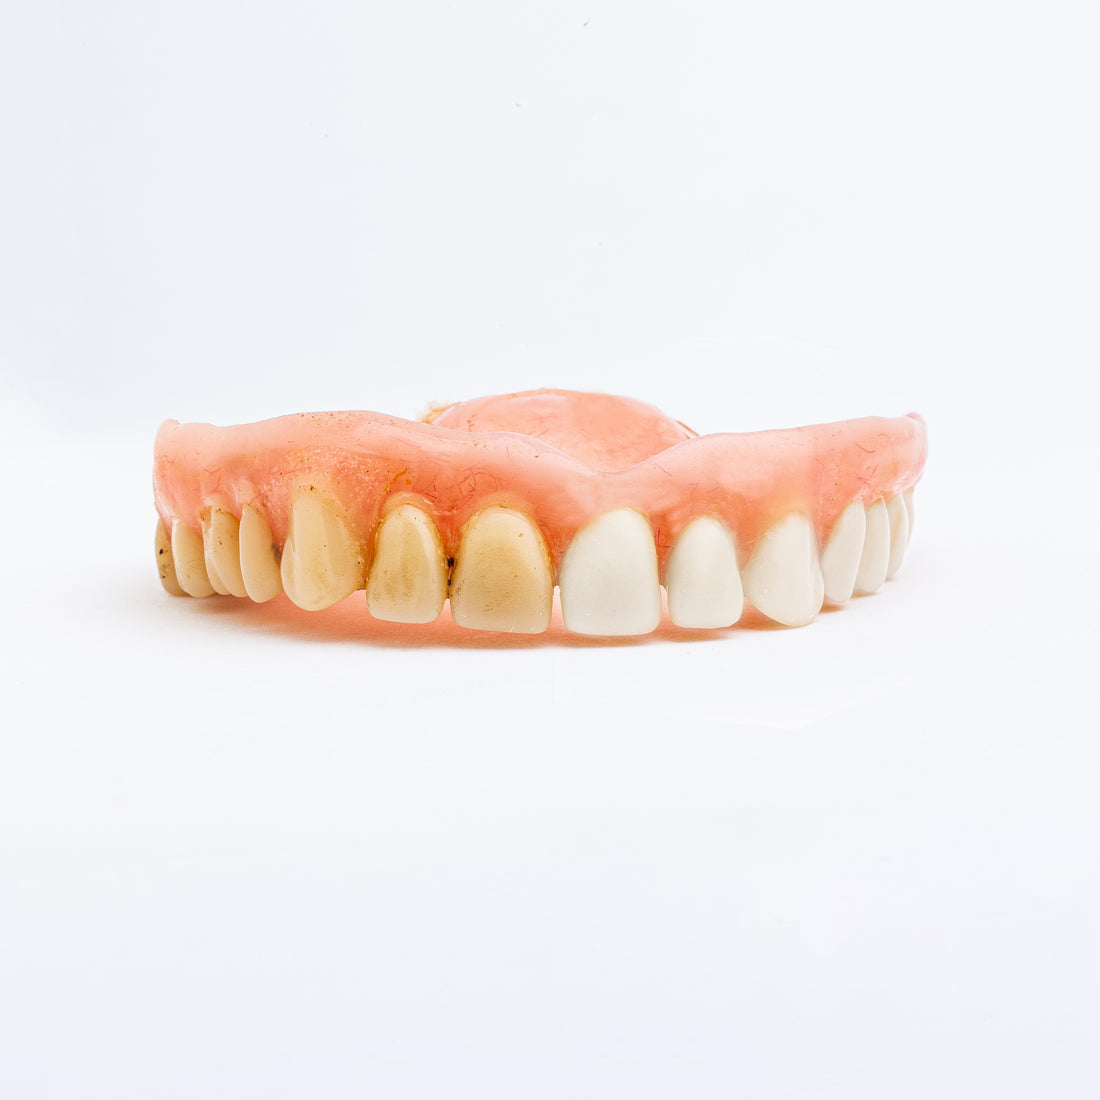 Ultrasonic cleaner dentures